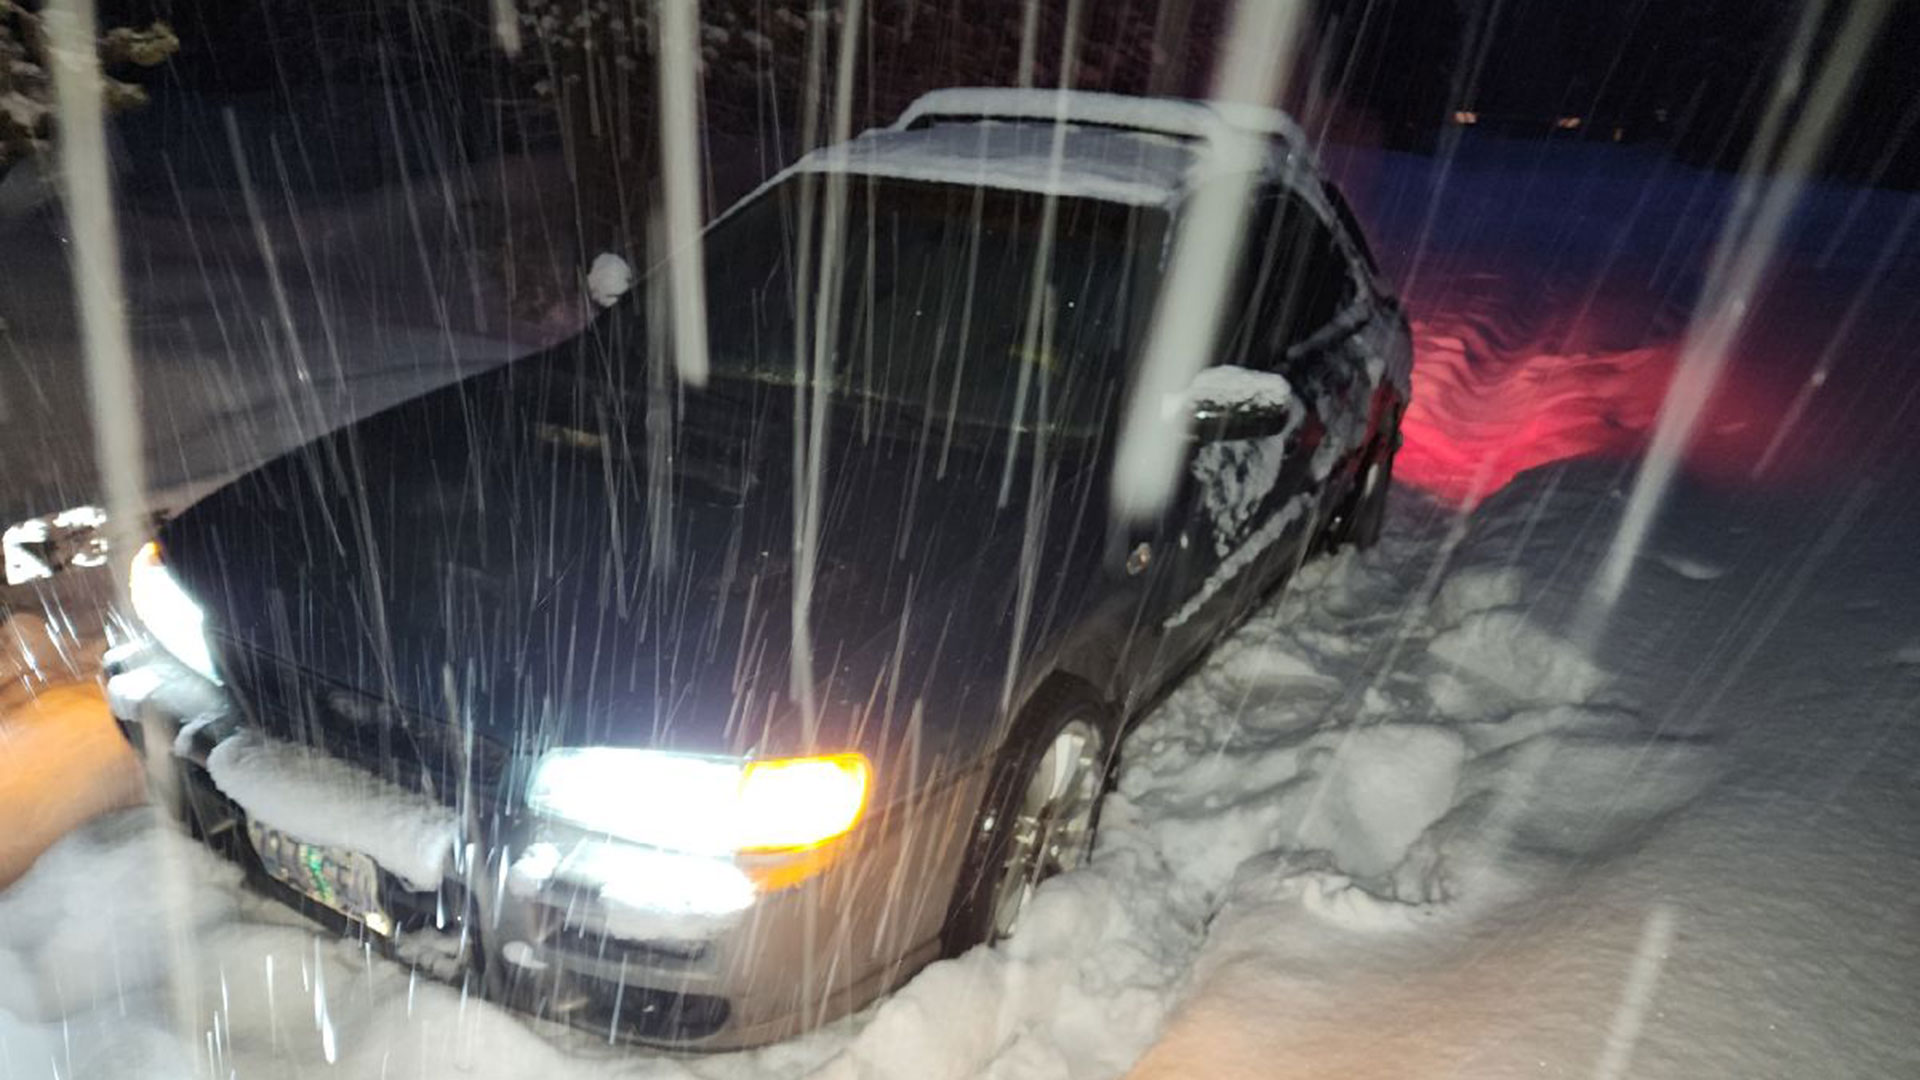 Impreza with highway slicks stuck in snow